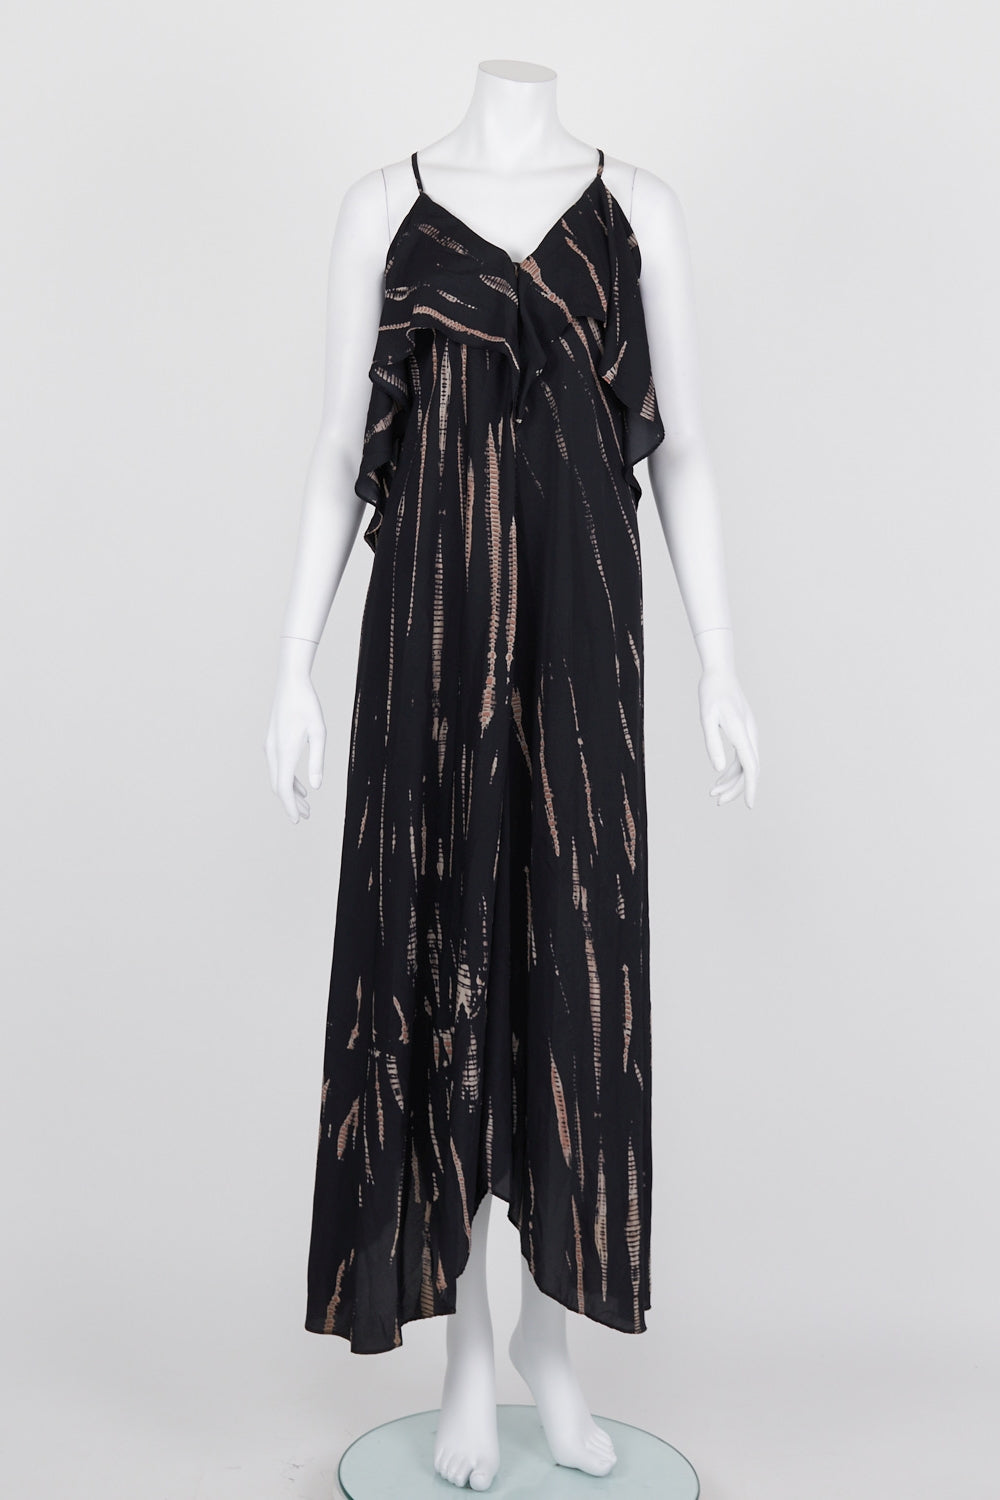 Bardot Black Patterned Maxi Dress 6